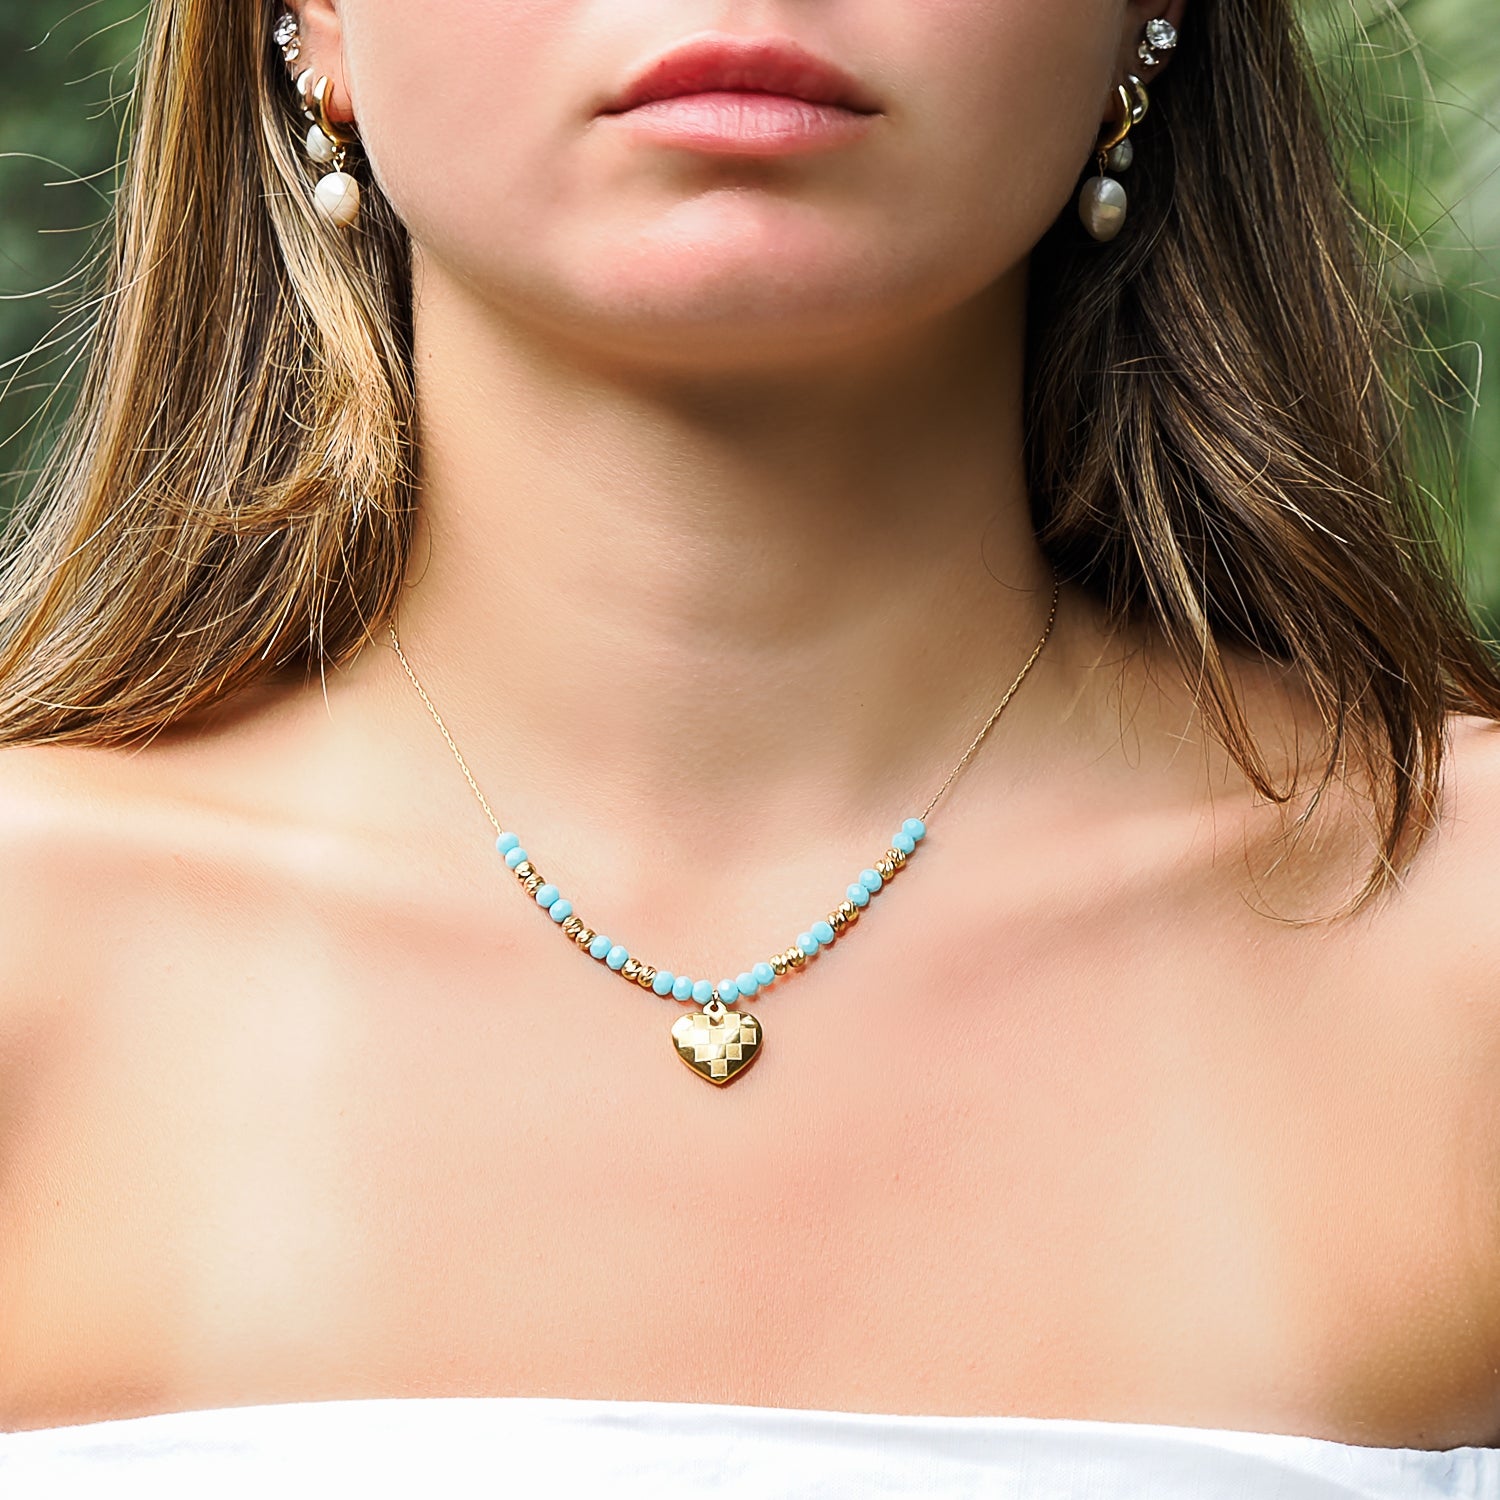 Radiate Serenity - Model Wearing Blue Crystal Heart Necklace.